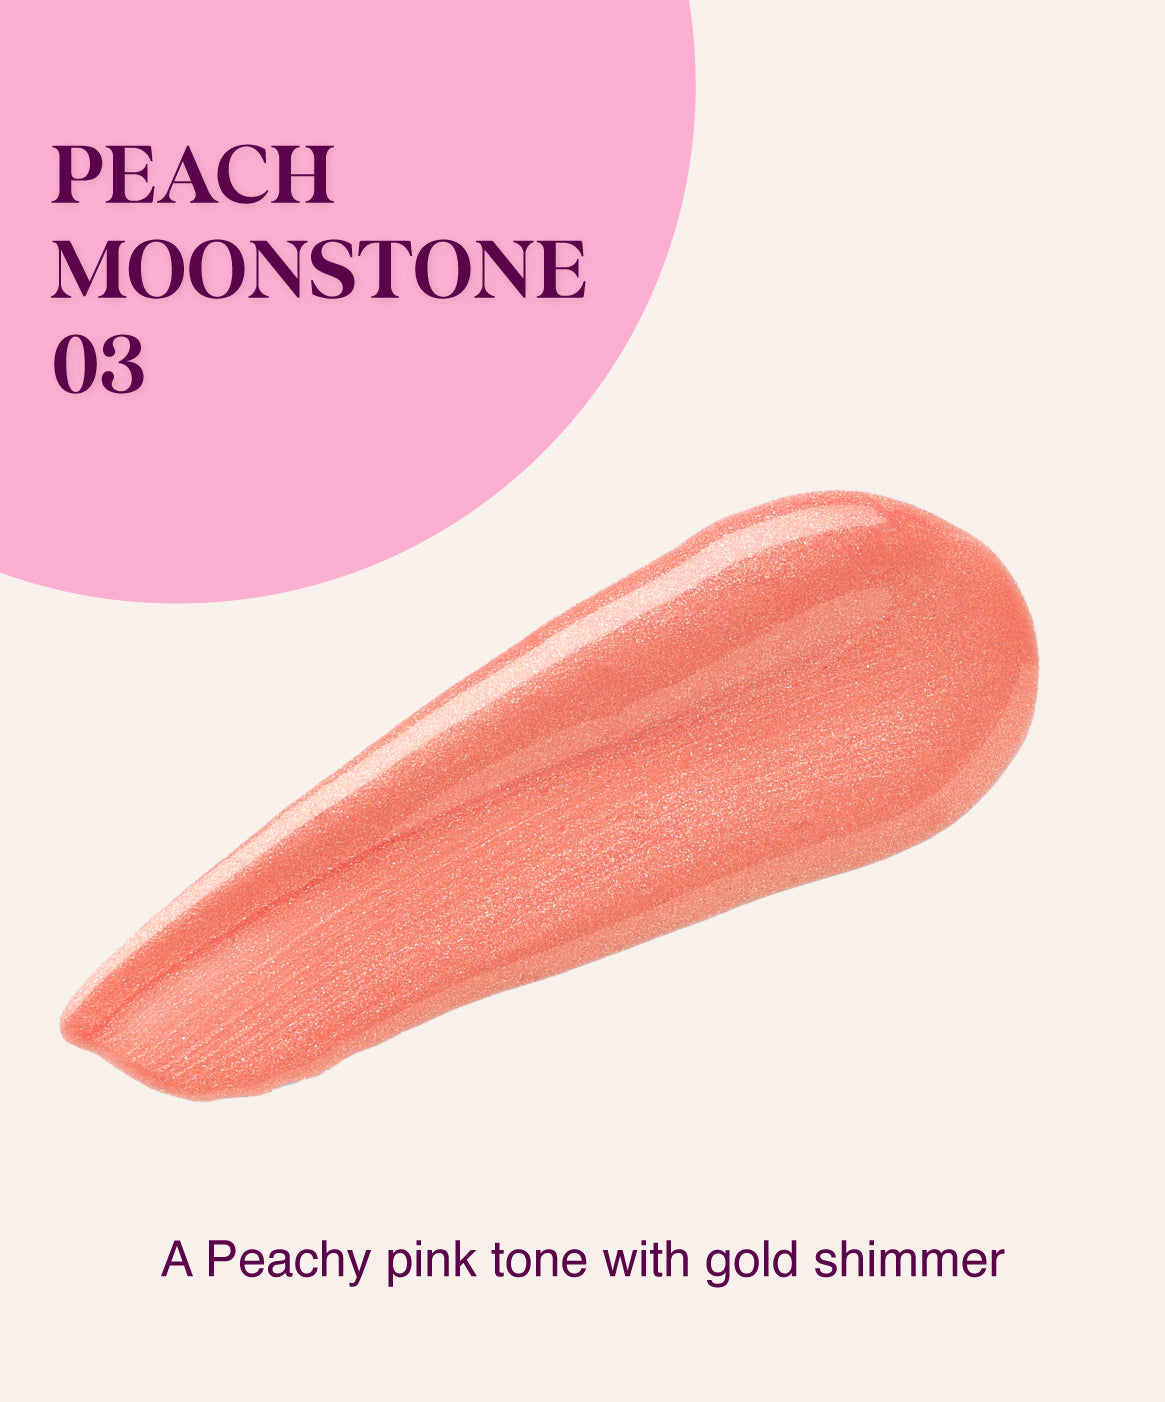 Peach Moonstone 03